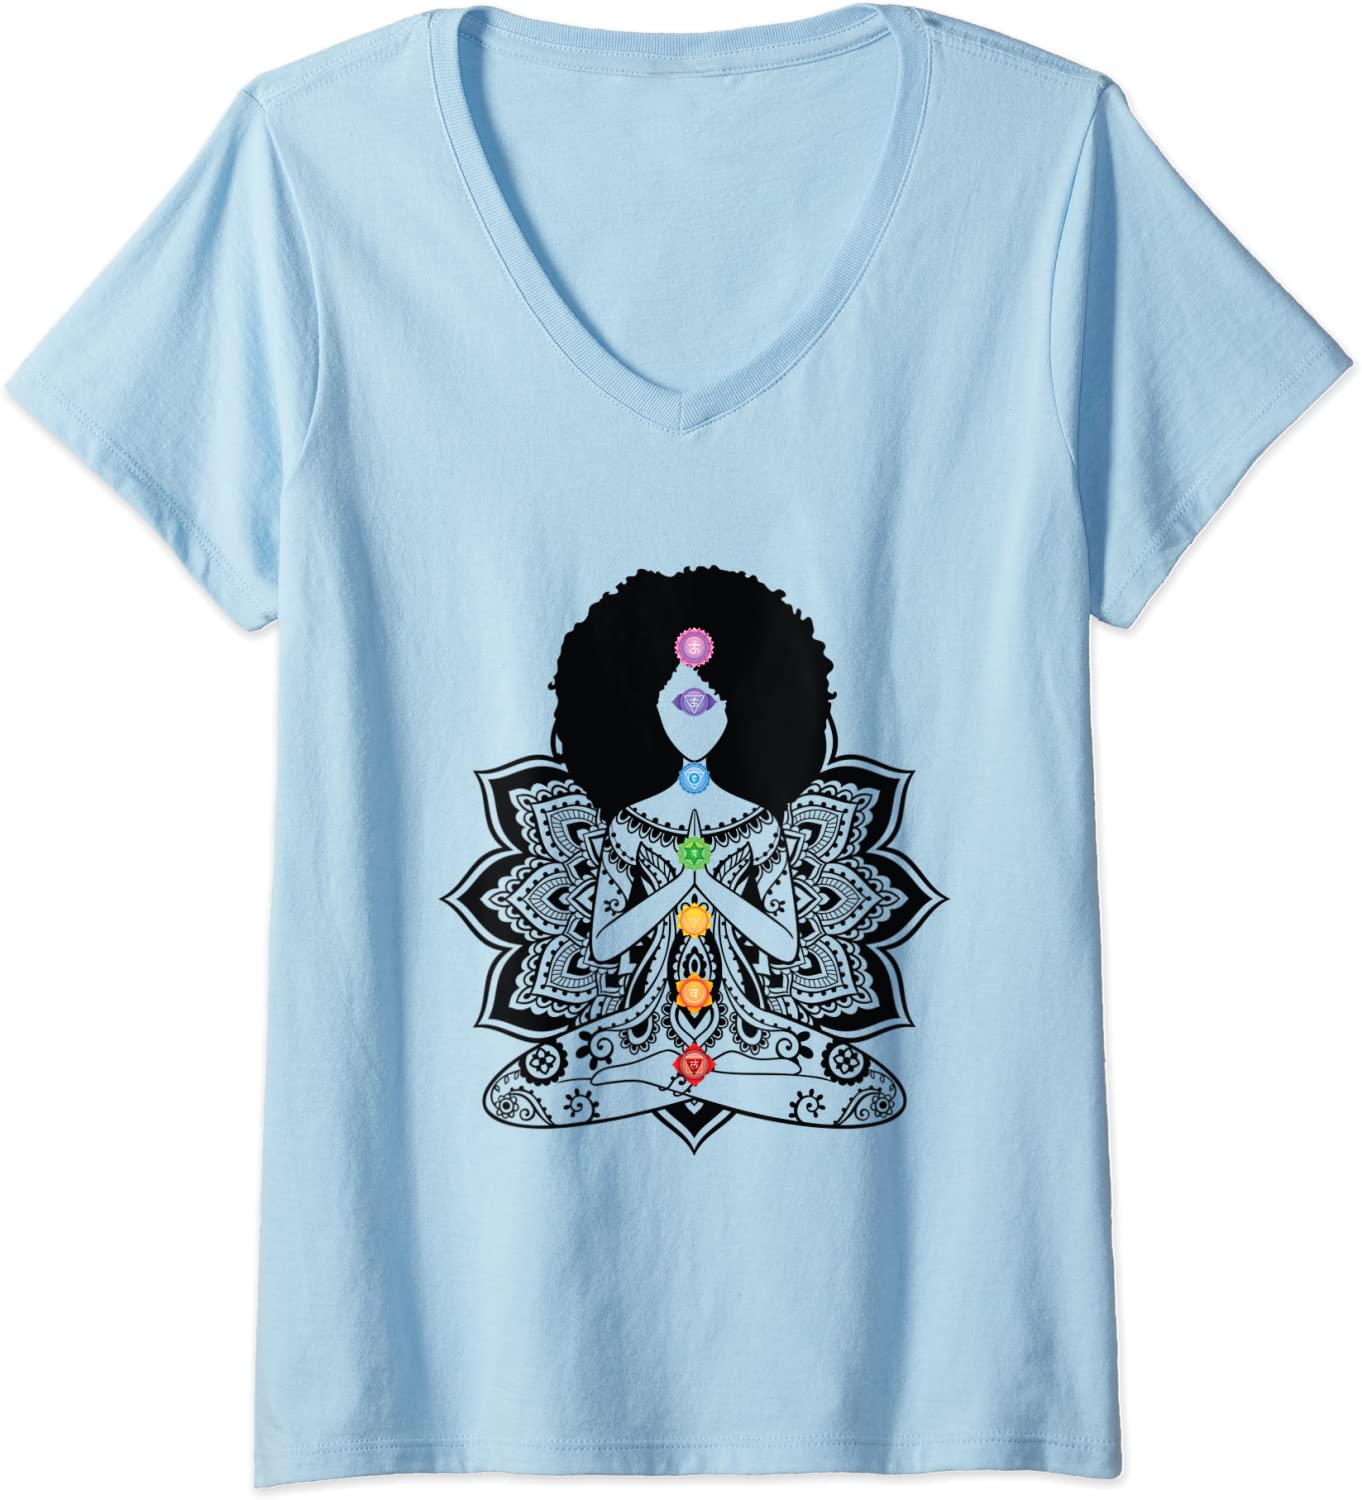 Wellcoda Mandala Yoga Womens T-shirt, Spiritual Casual Design Printed Tee